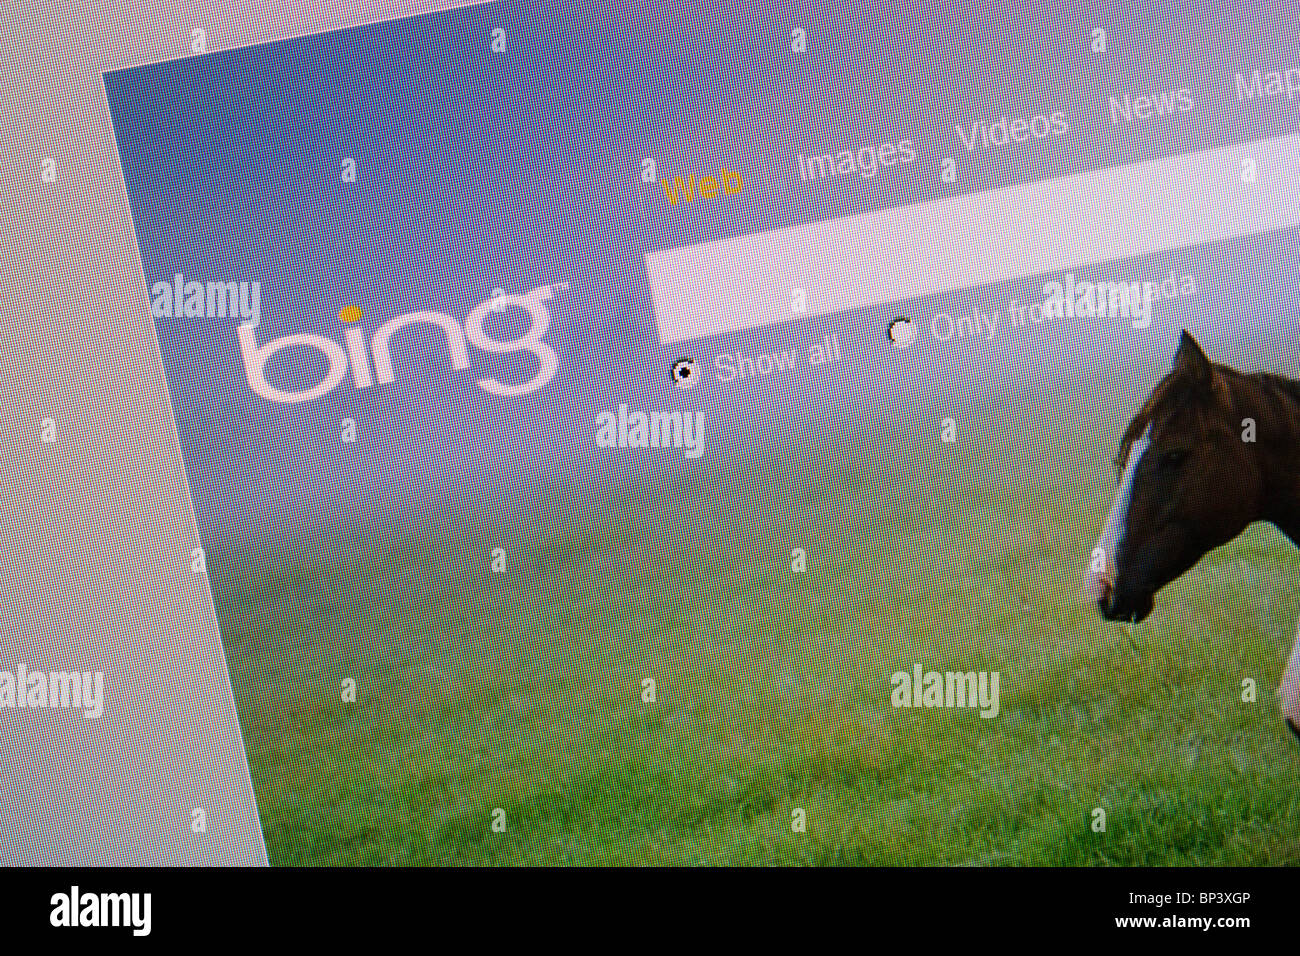 Microsoft bing search engine screen shot Stock Photo